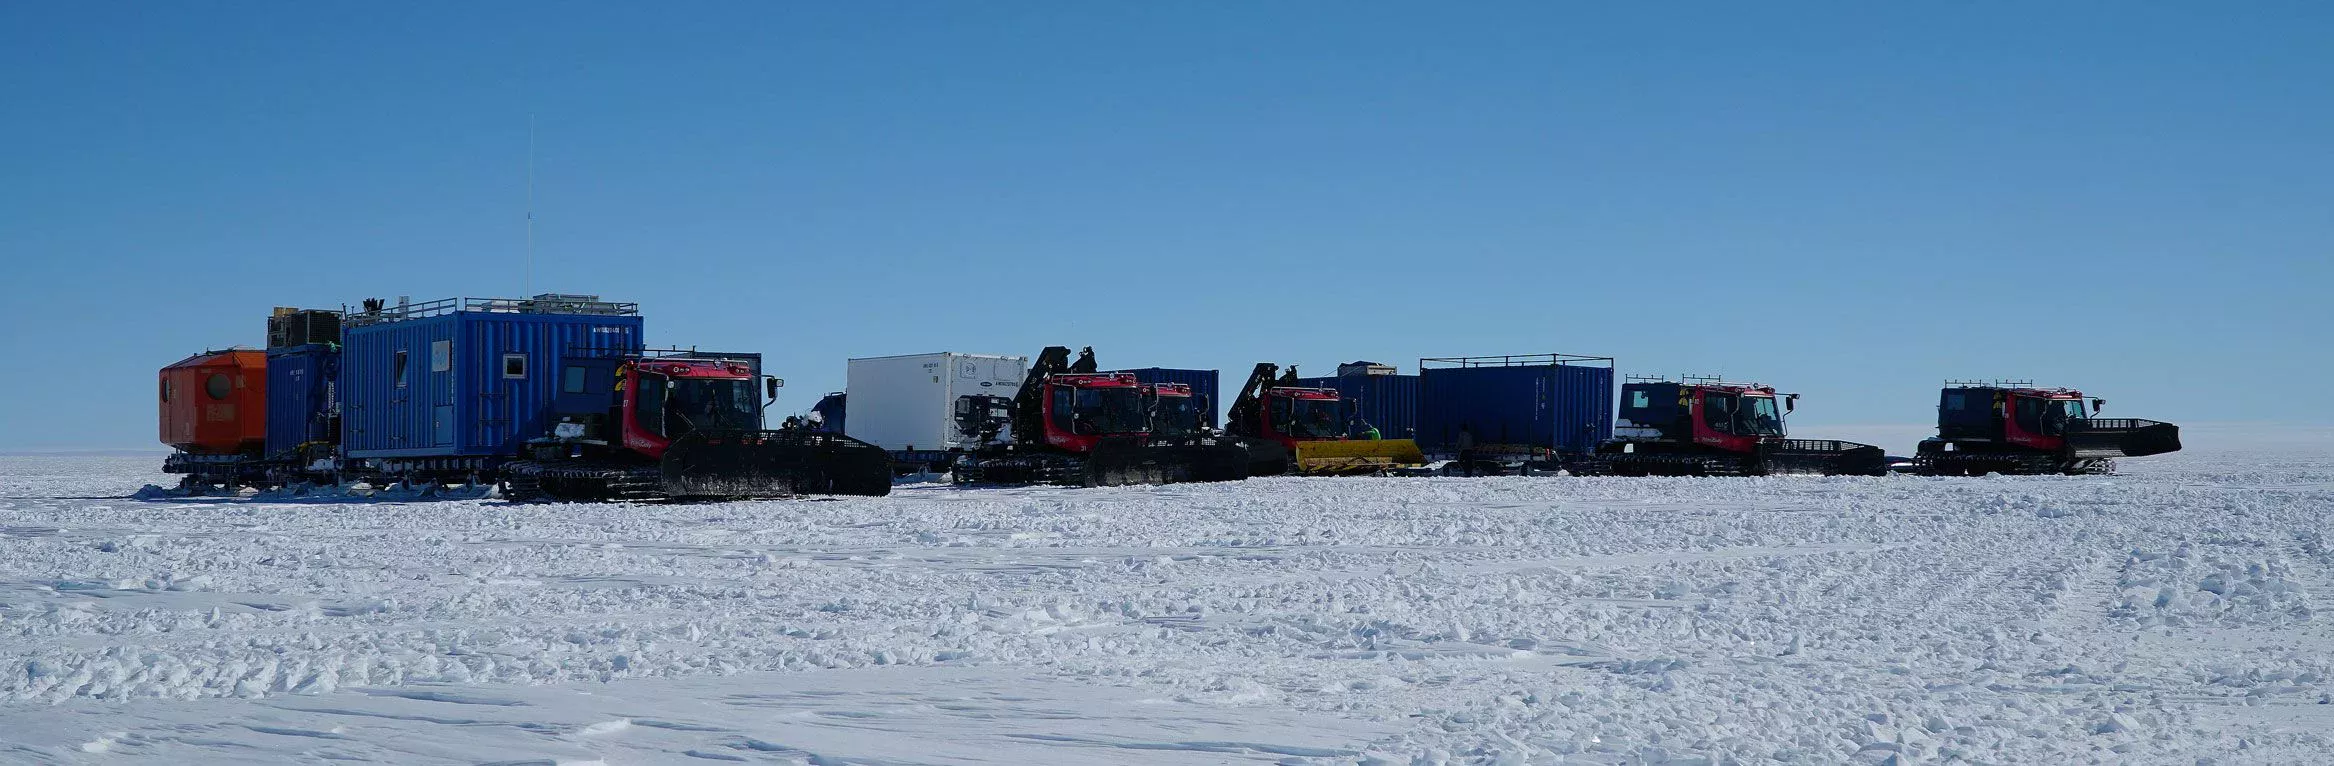 PistenBully 300 Polar Antarktis 